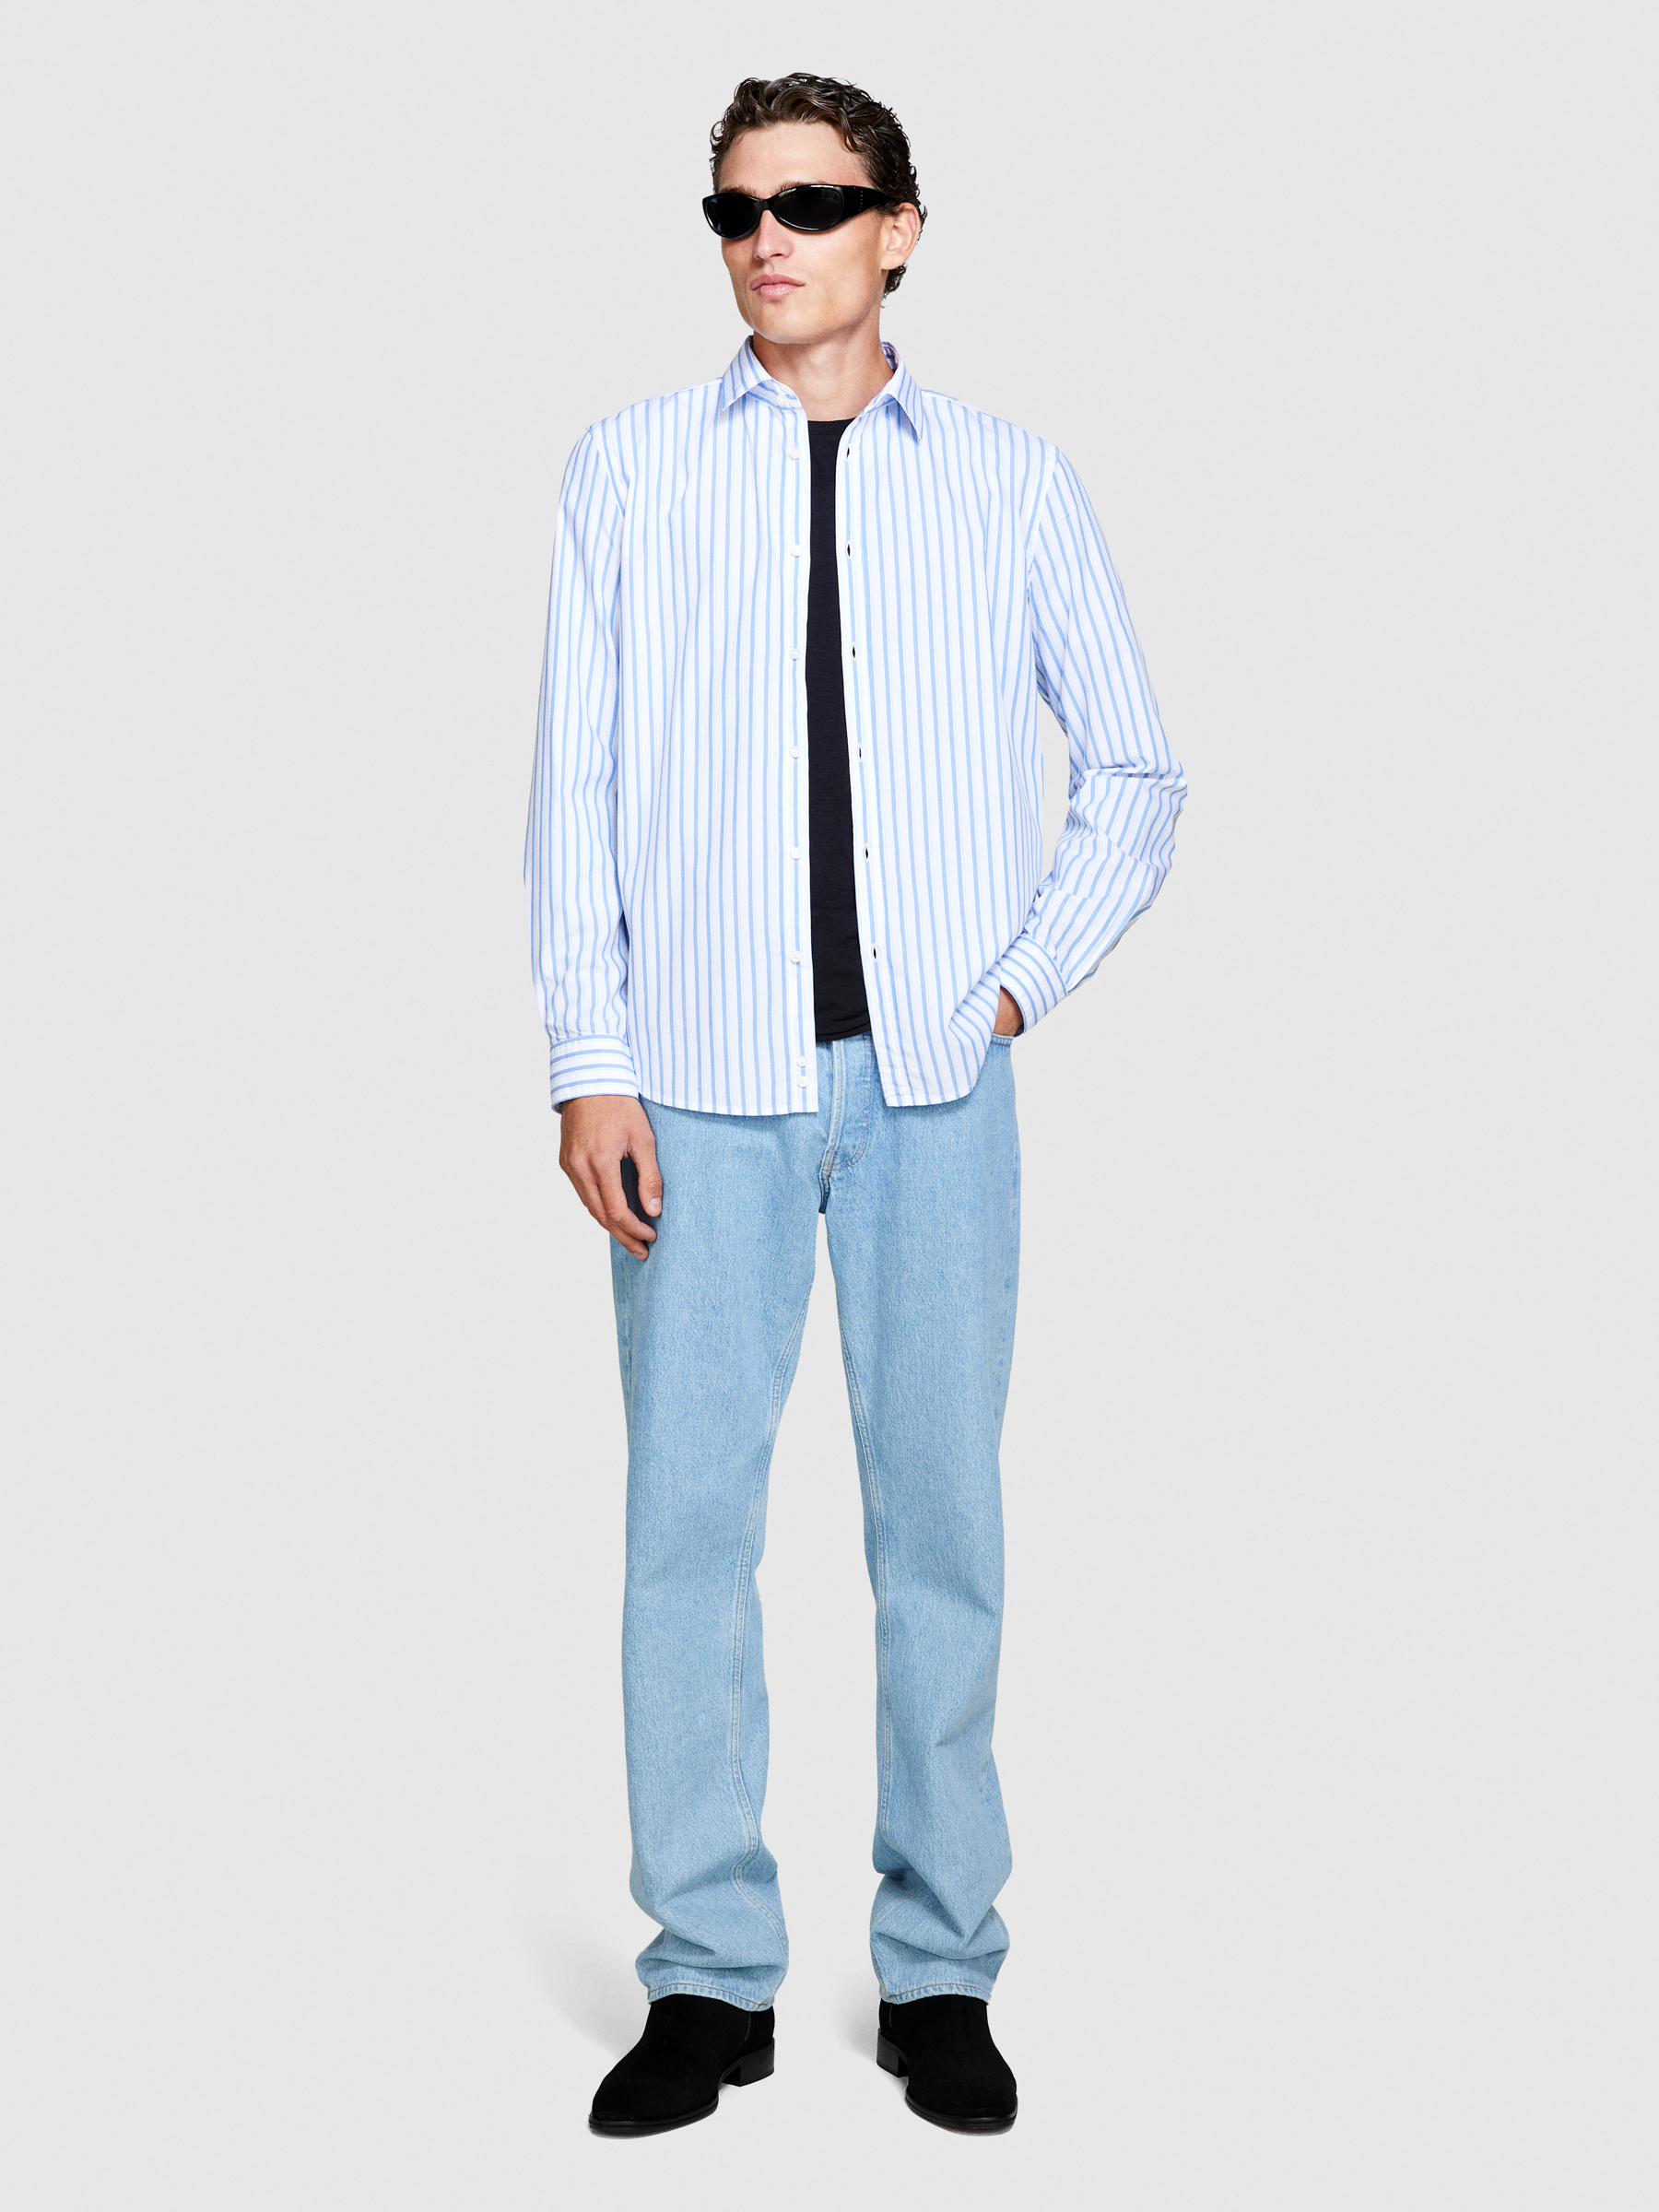 Sisley - Striped Shirt, Man, Light Blue, Size: 38